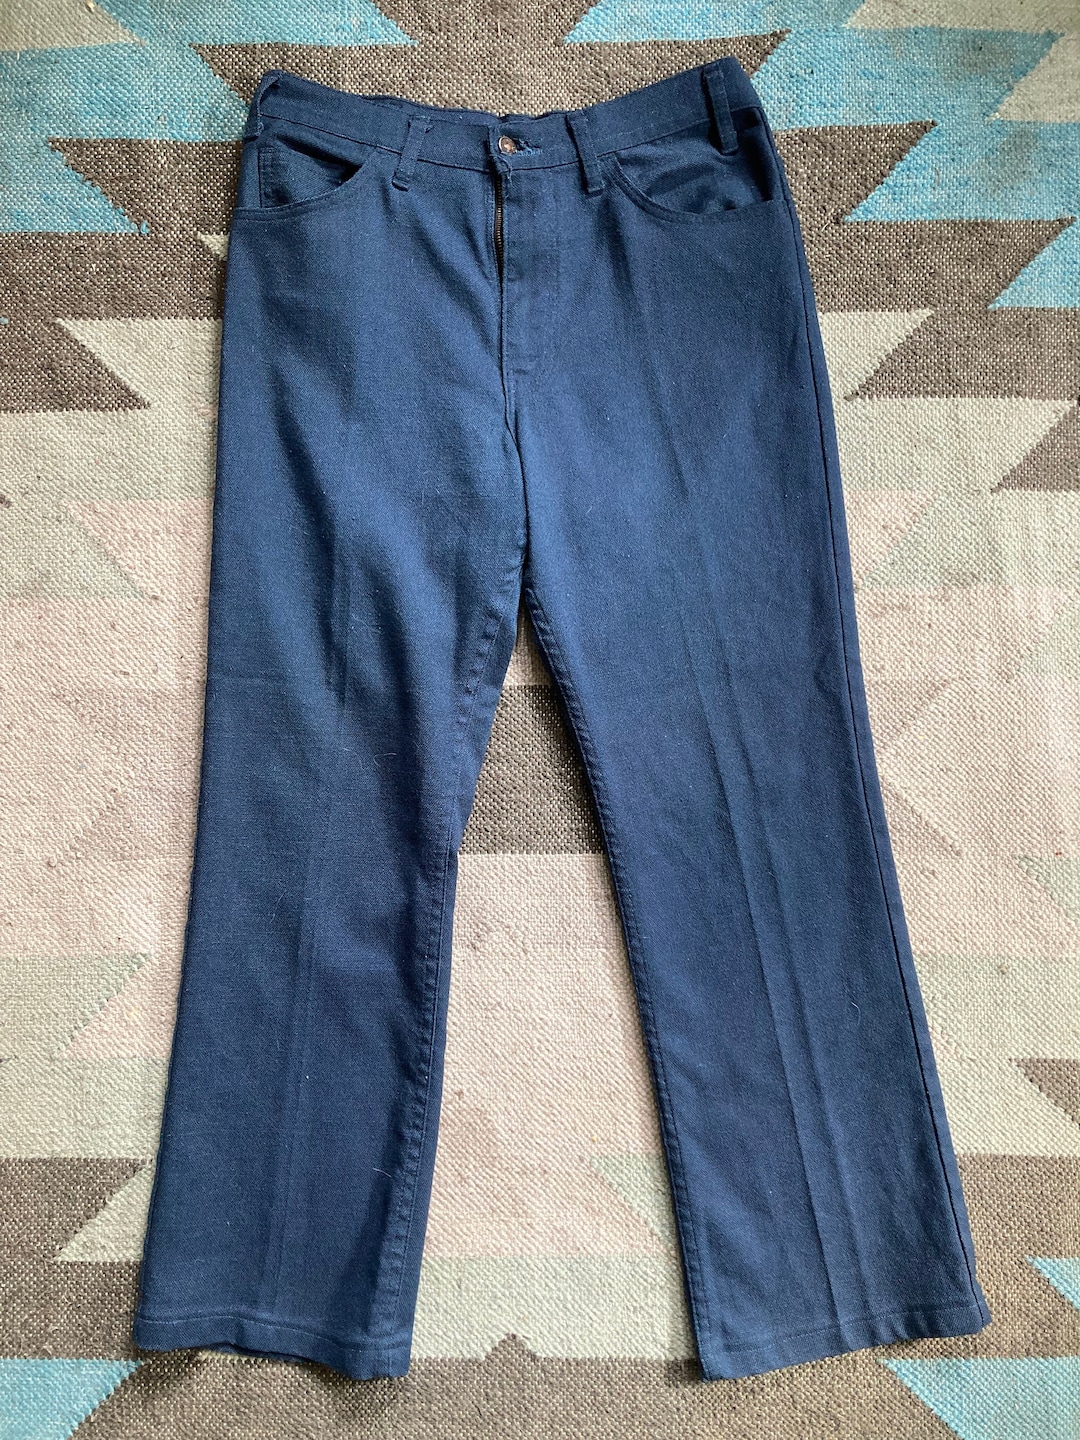 Vintage LEVI'S STA PREST Navy Blue Pants 33 X 27.5 